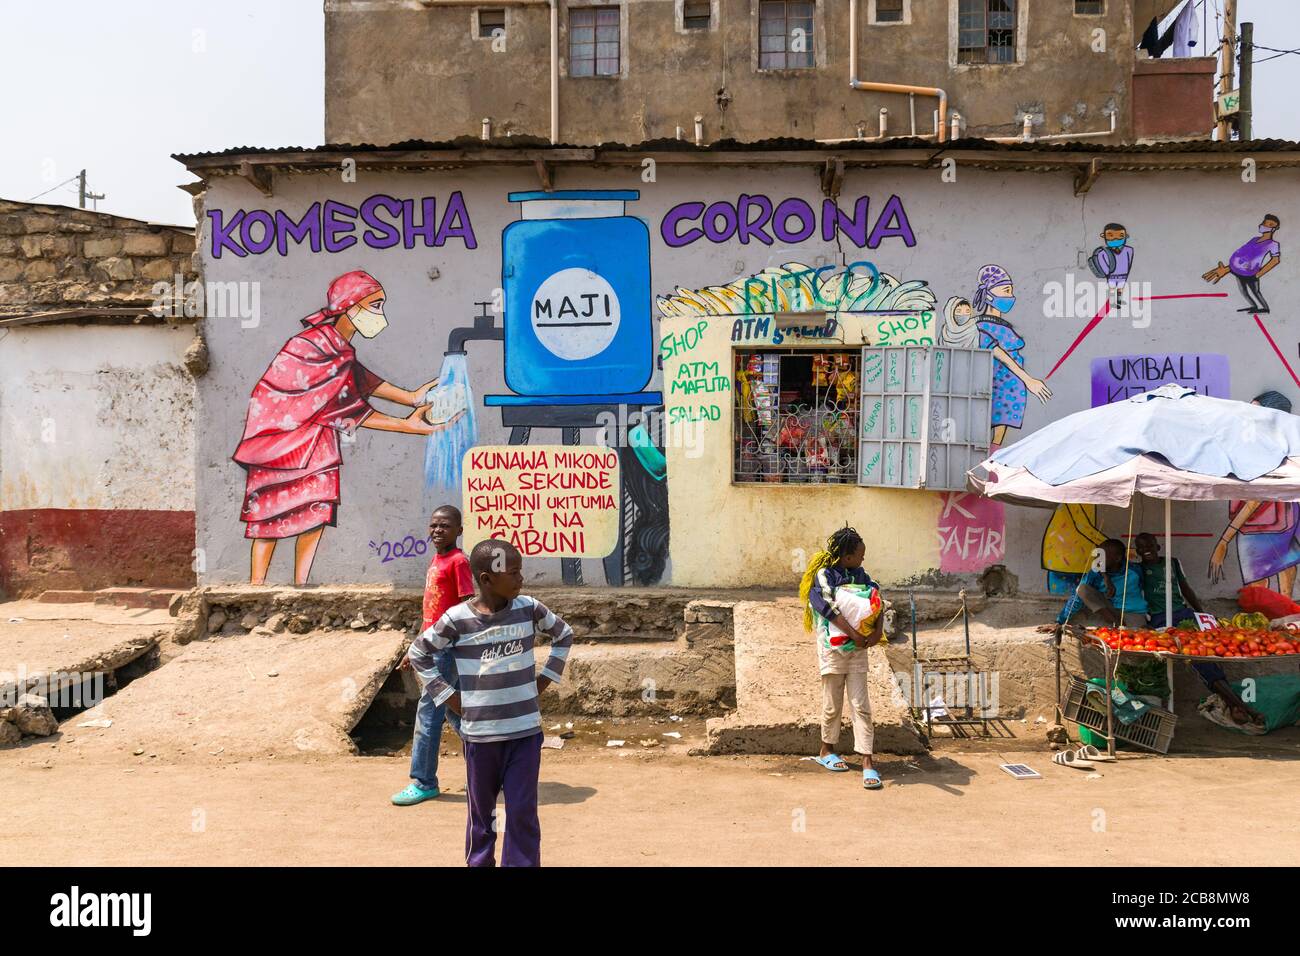 A roadside shop with a large painted mural saying Komesha Corona or Stop Corona and an image of a woman washing their hands, Nairobi, Kenya Stock Photo